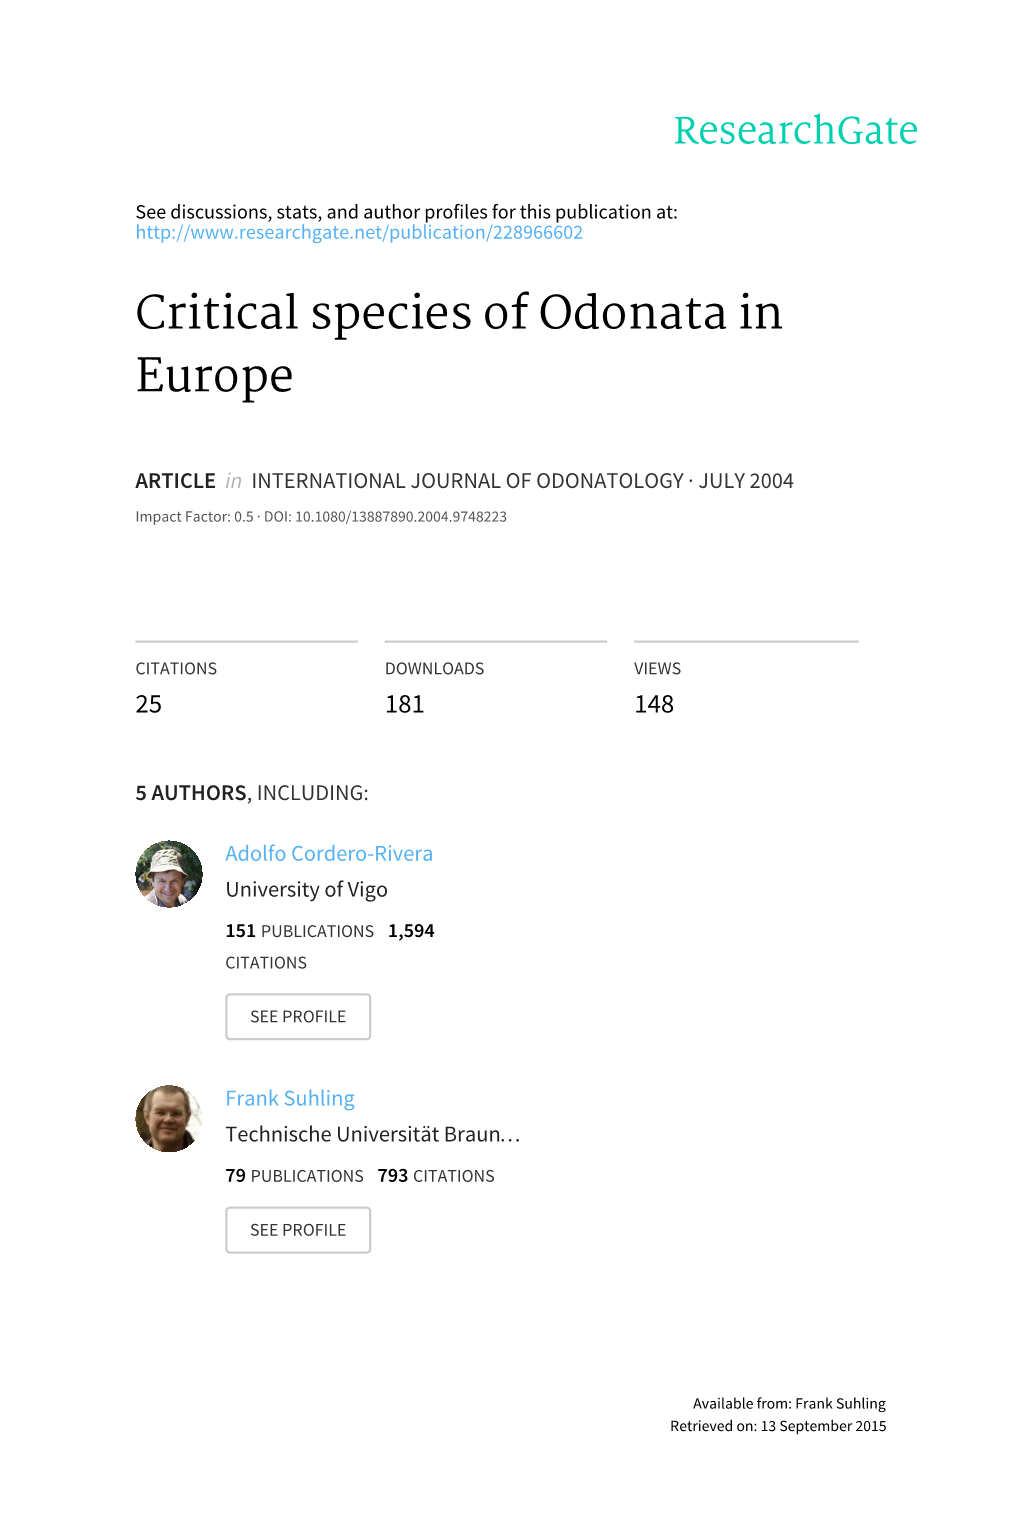 Critical Species of Odonata in Europe